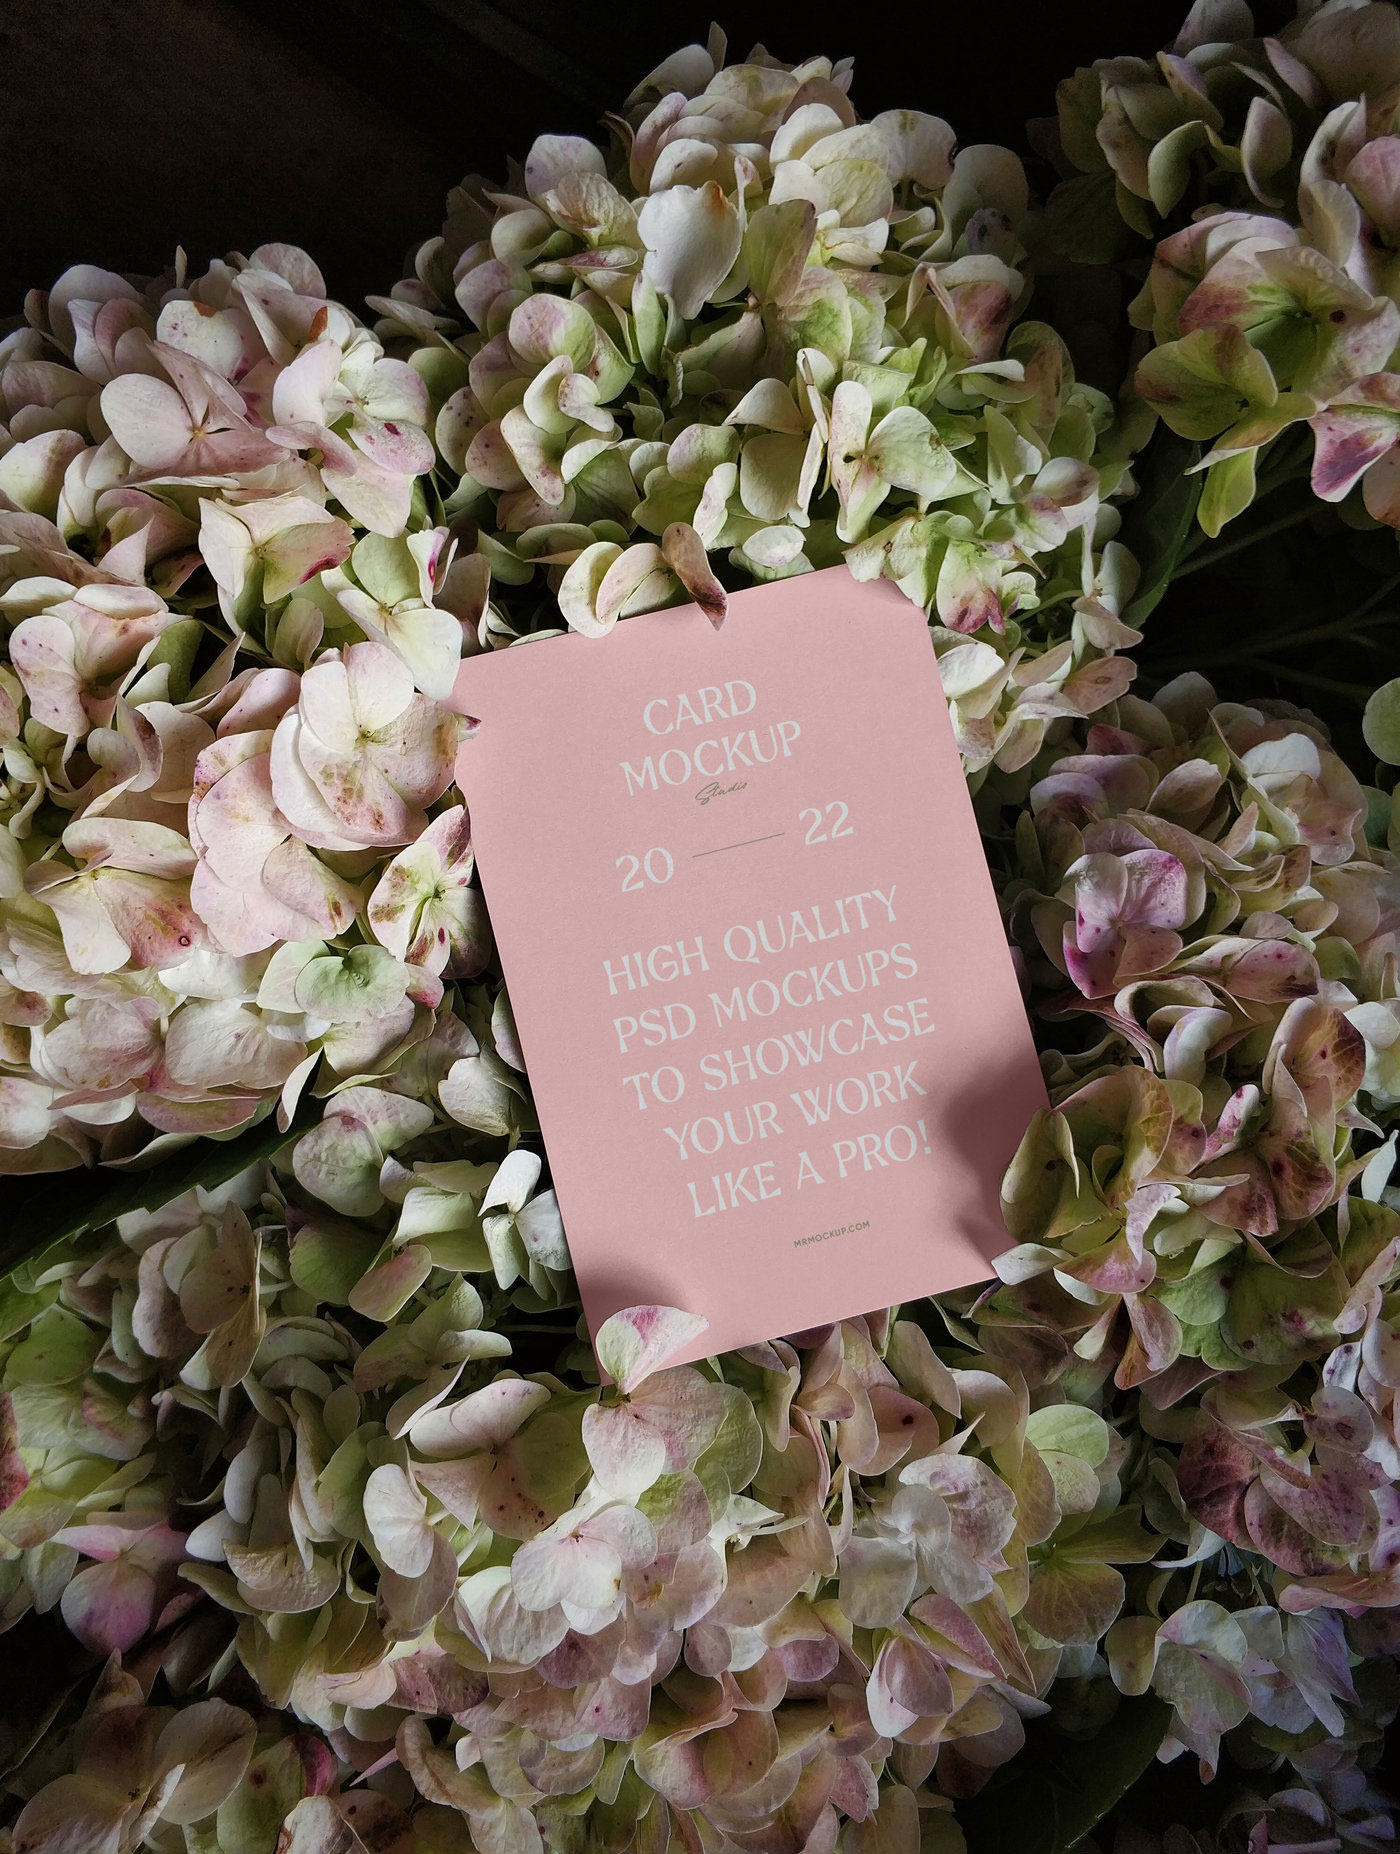 Vista superior de la maqueta de tarjetas entre flores